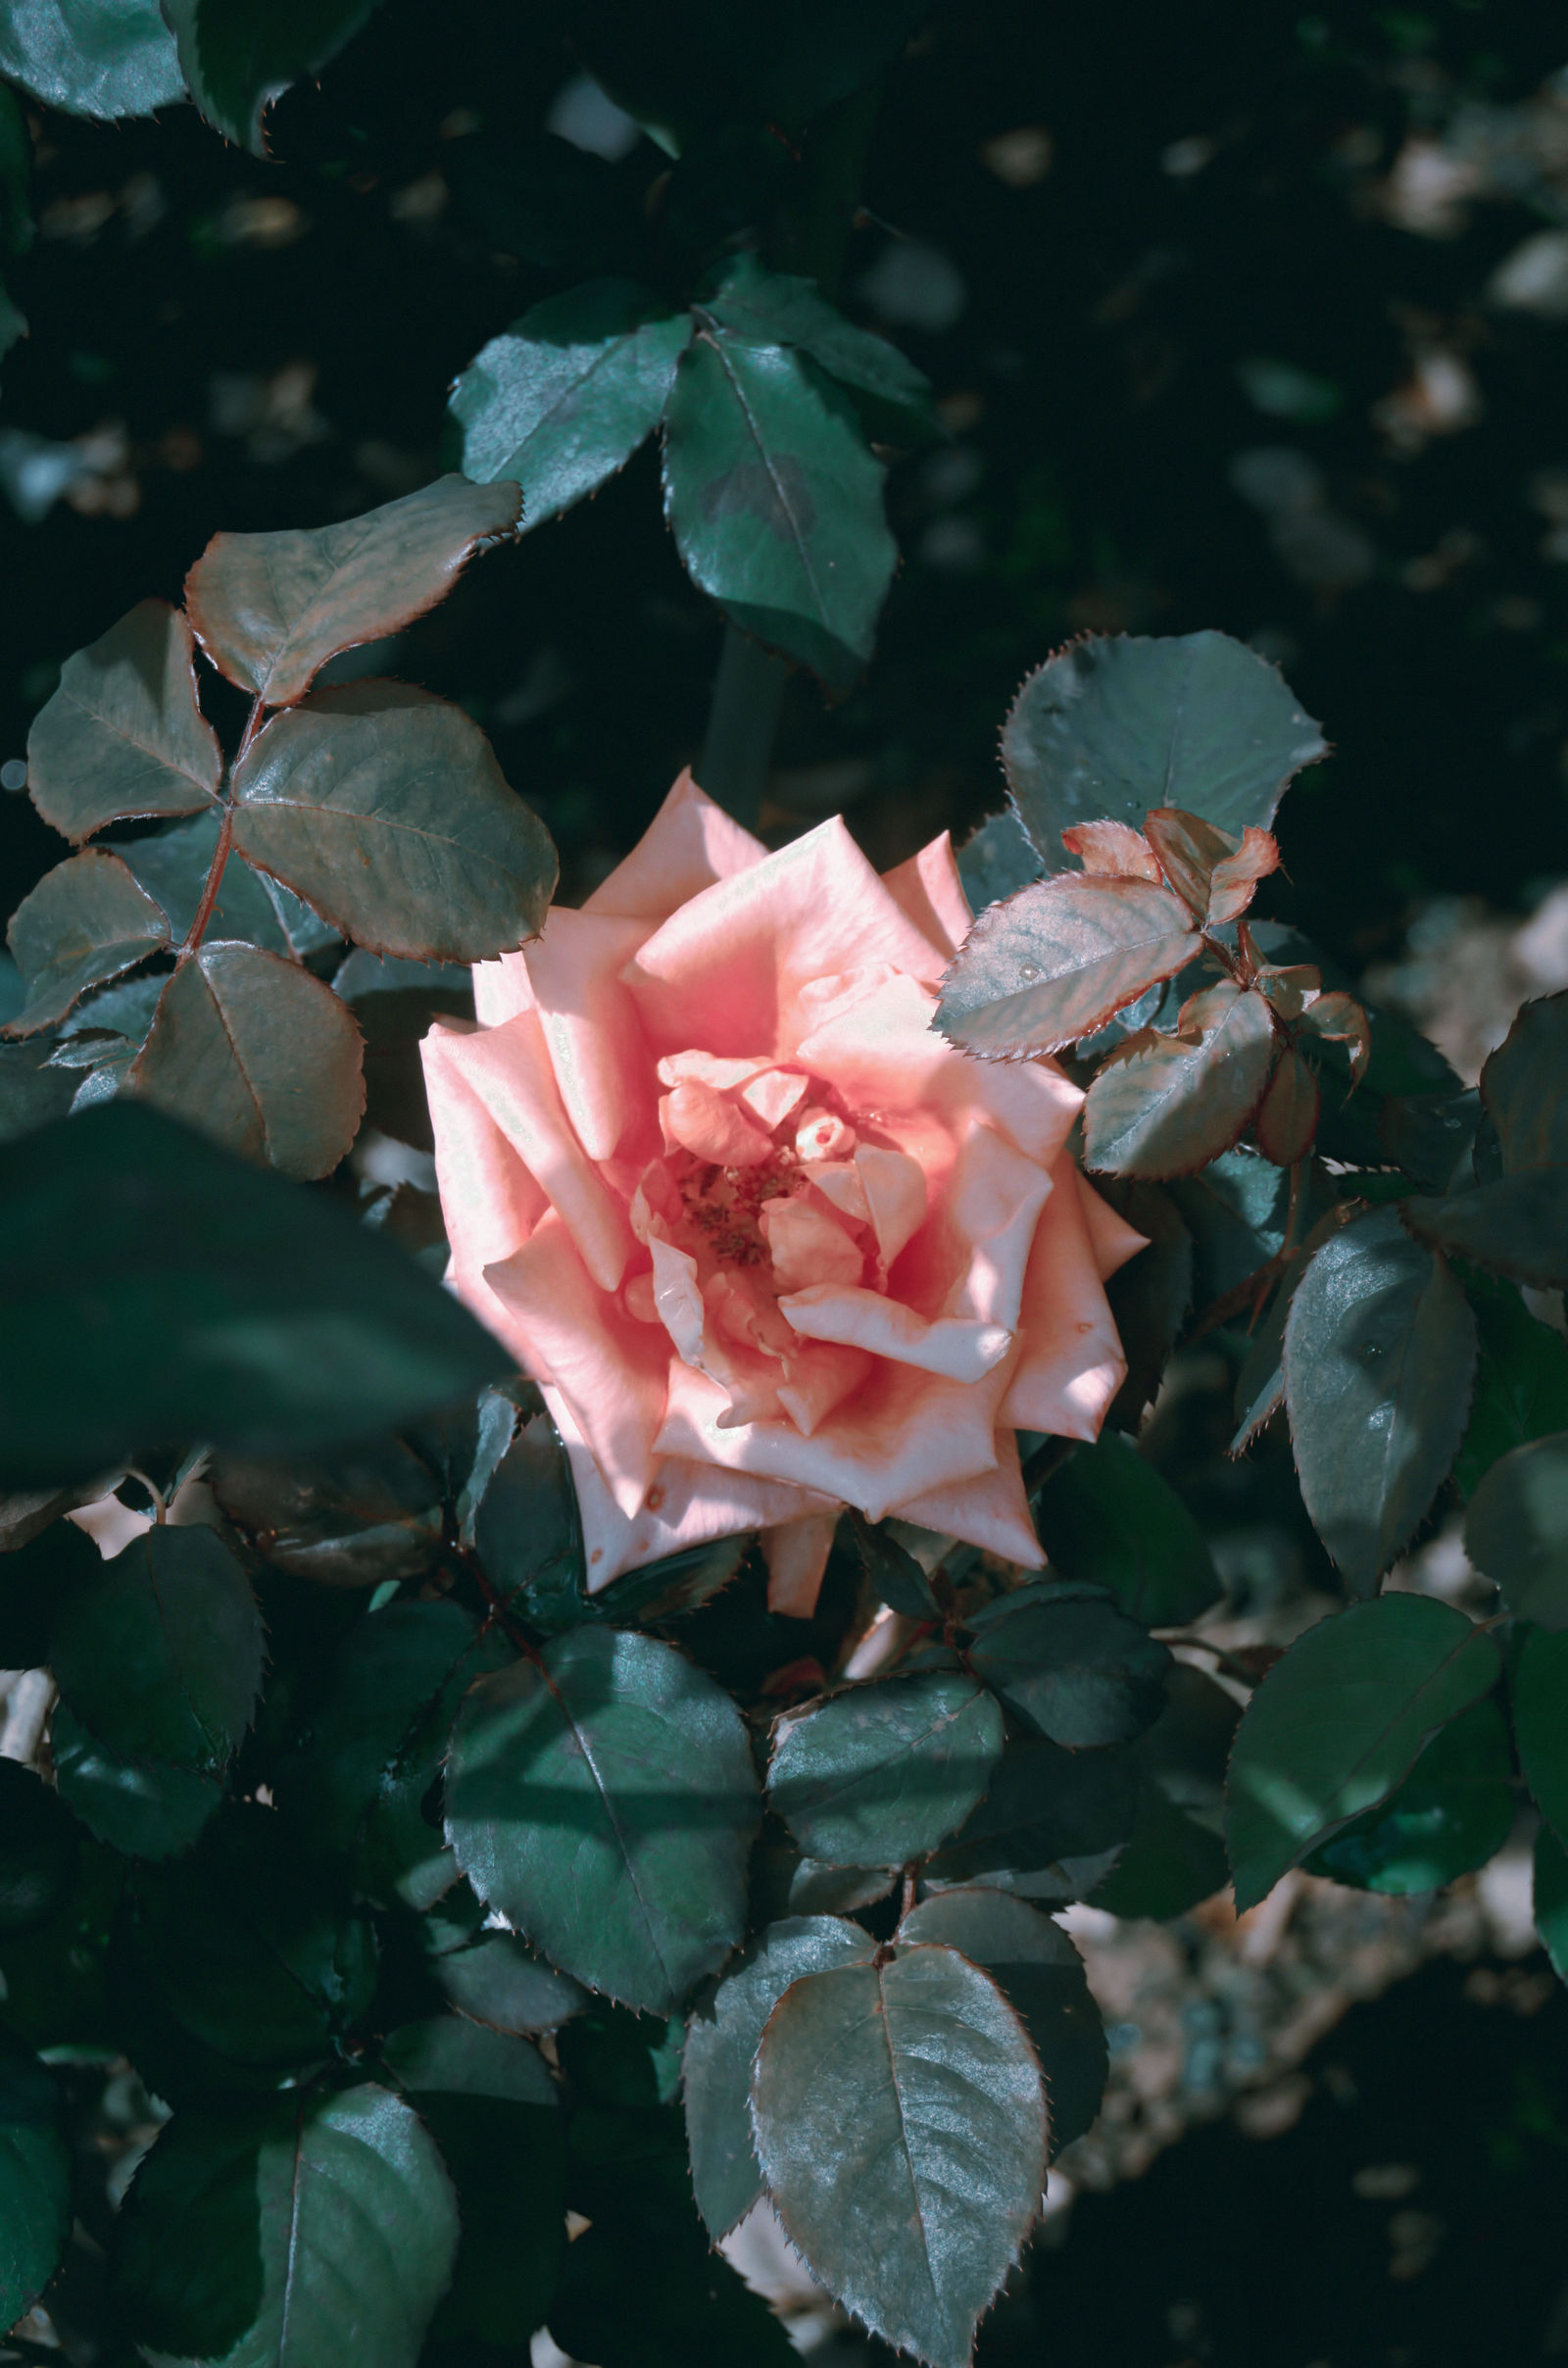 [Dalat Flowers] Rose by CAcorporation on DeviantArt